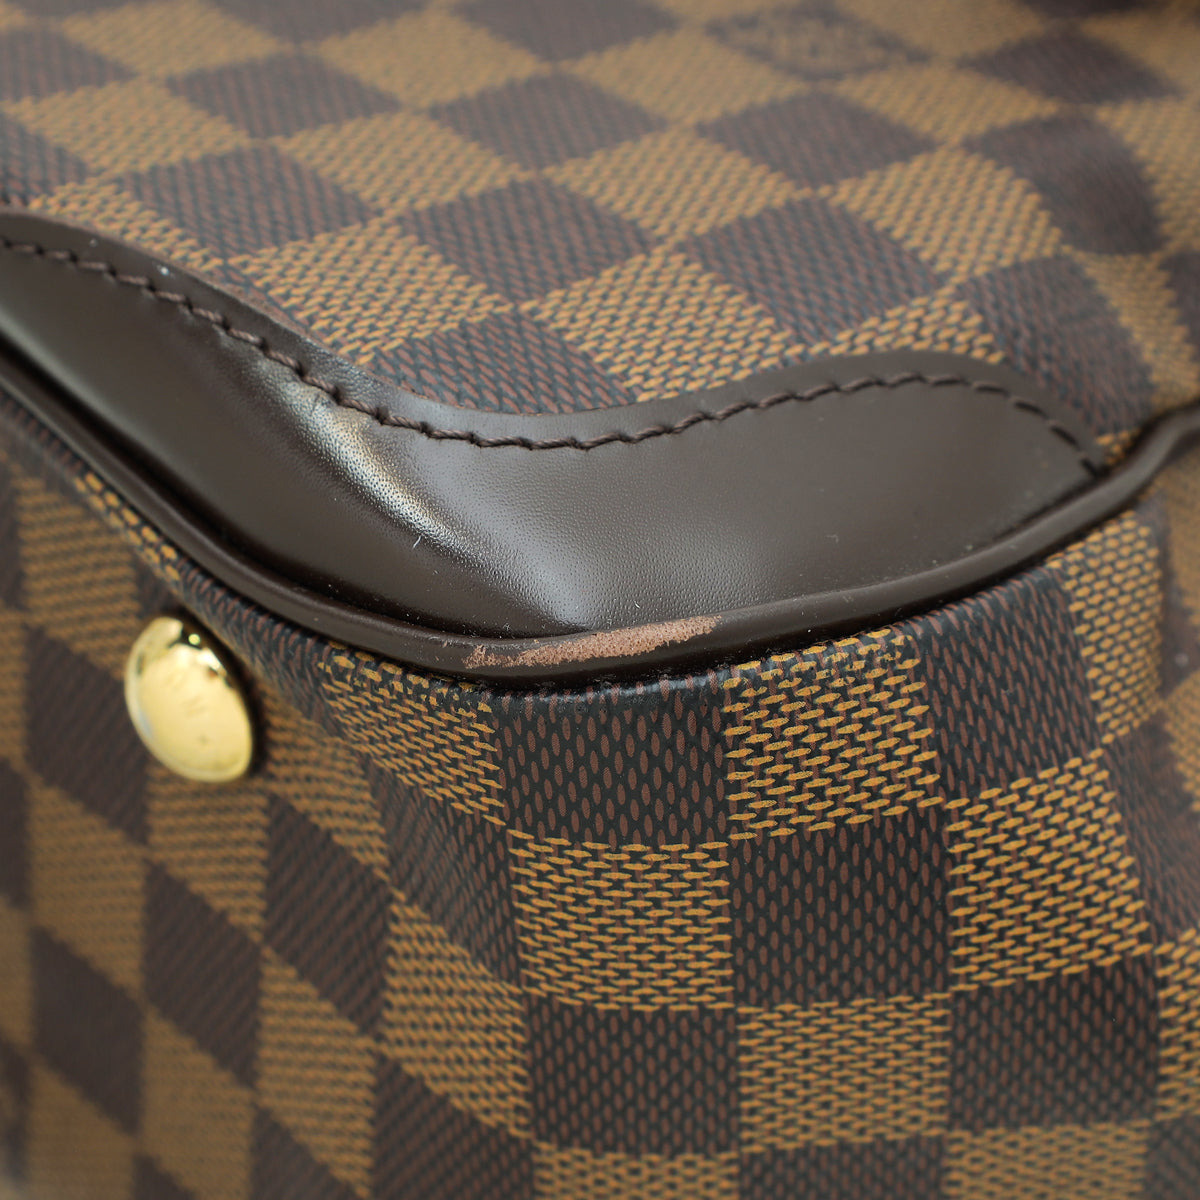 LOUIS VUITTON Damier Ebene Verona handbag authentic